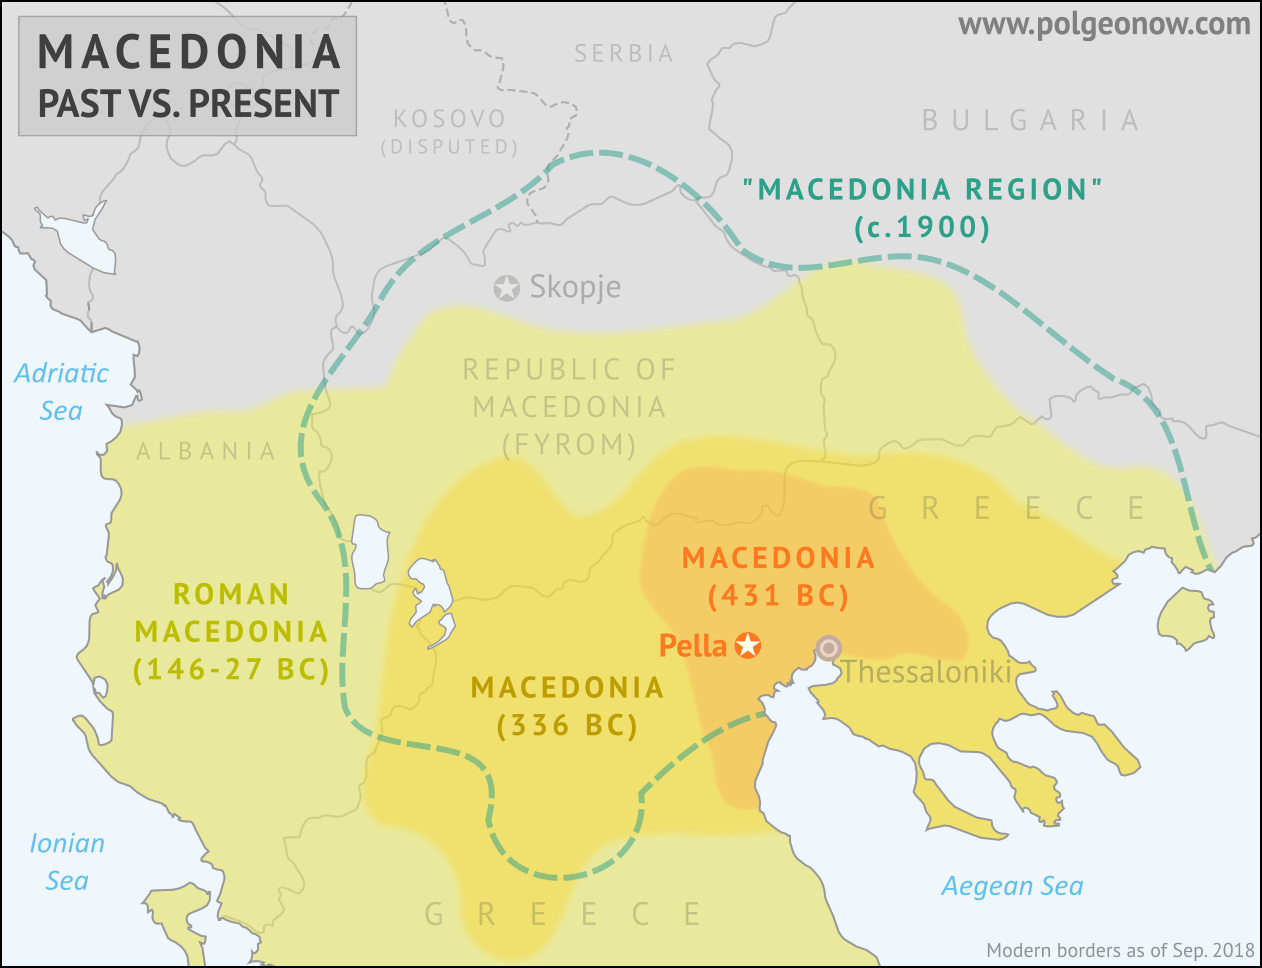 https://2.bp.blogspot.com/-kiFCXOKrrGQ/W63rtlbMDkI/AAAAAAAACkI/vN3tNe7sEkkFt3XZIAt4uRk69Urxtj5SgCLcBGAs/s1600/map-macedonia-ancient-vs-modern-fyrom-greece-alexander.png